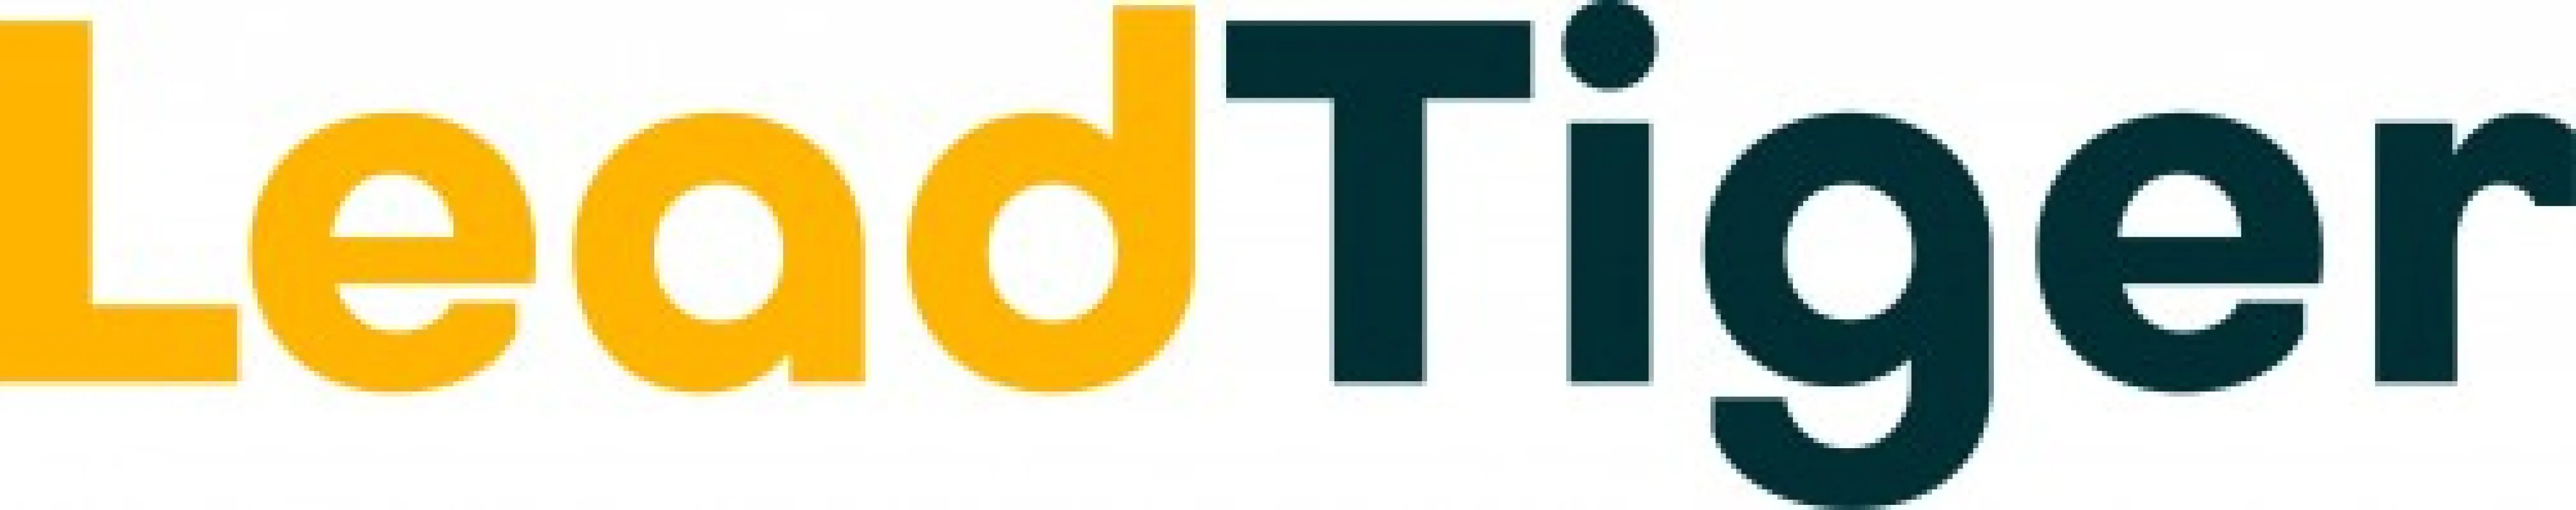 LeadTiger logo